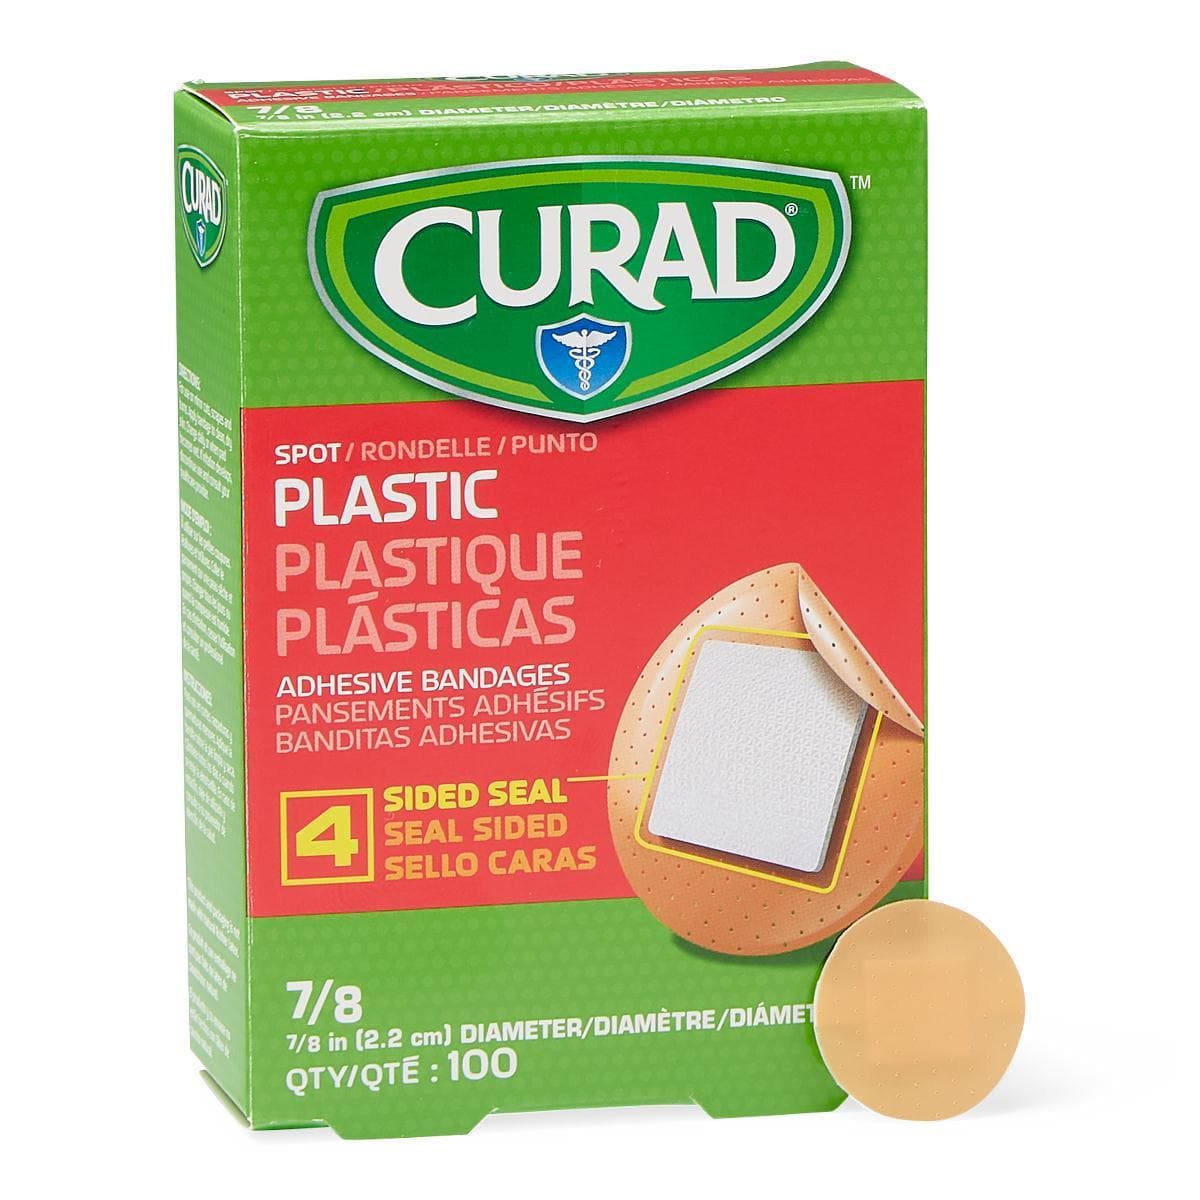 CURAD Plastic Adhesive Bandages - Size 7/8" Spot - Box of 100 - Senior.com Bandages